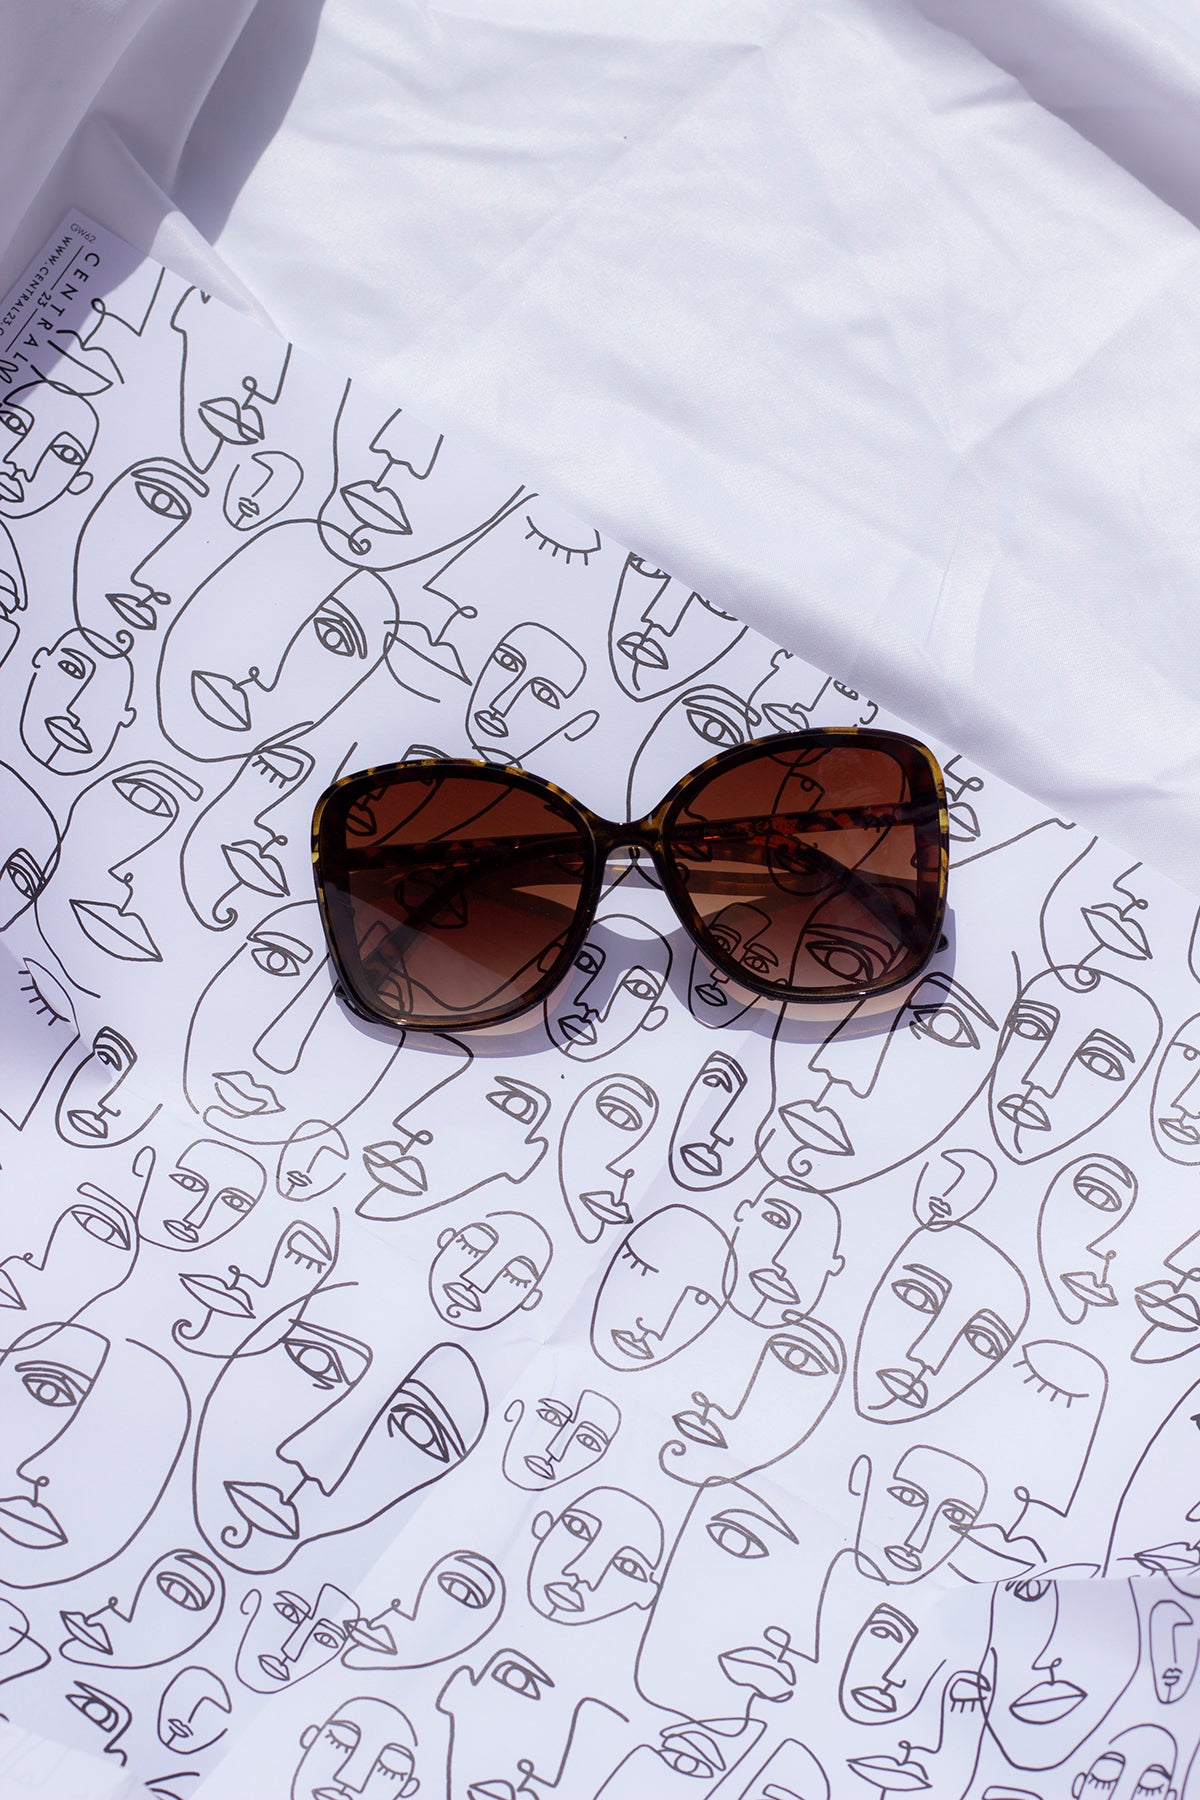 Super Oversize Butterfly Designer Style Sunglasses - Sugar + Style